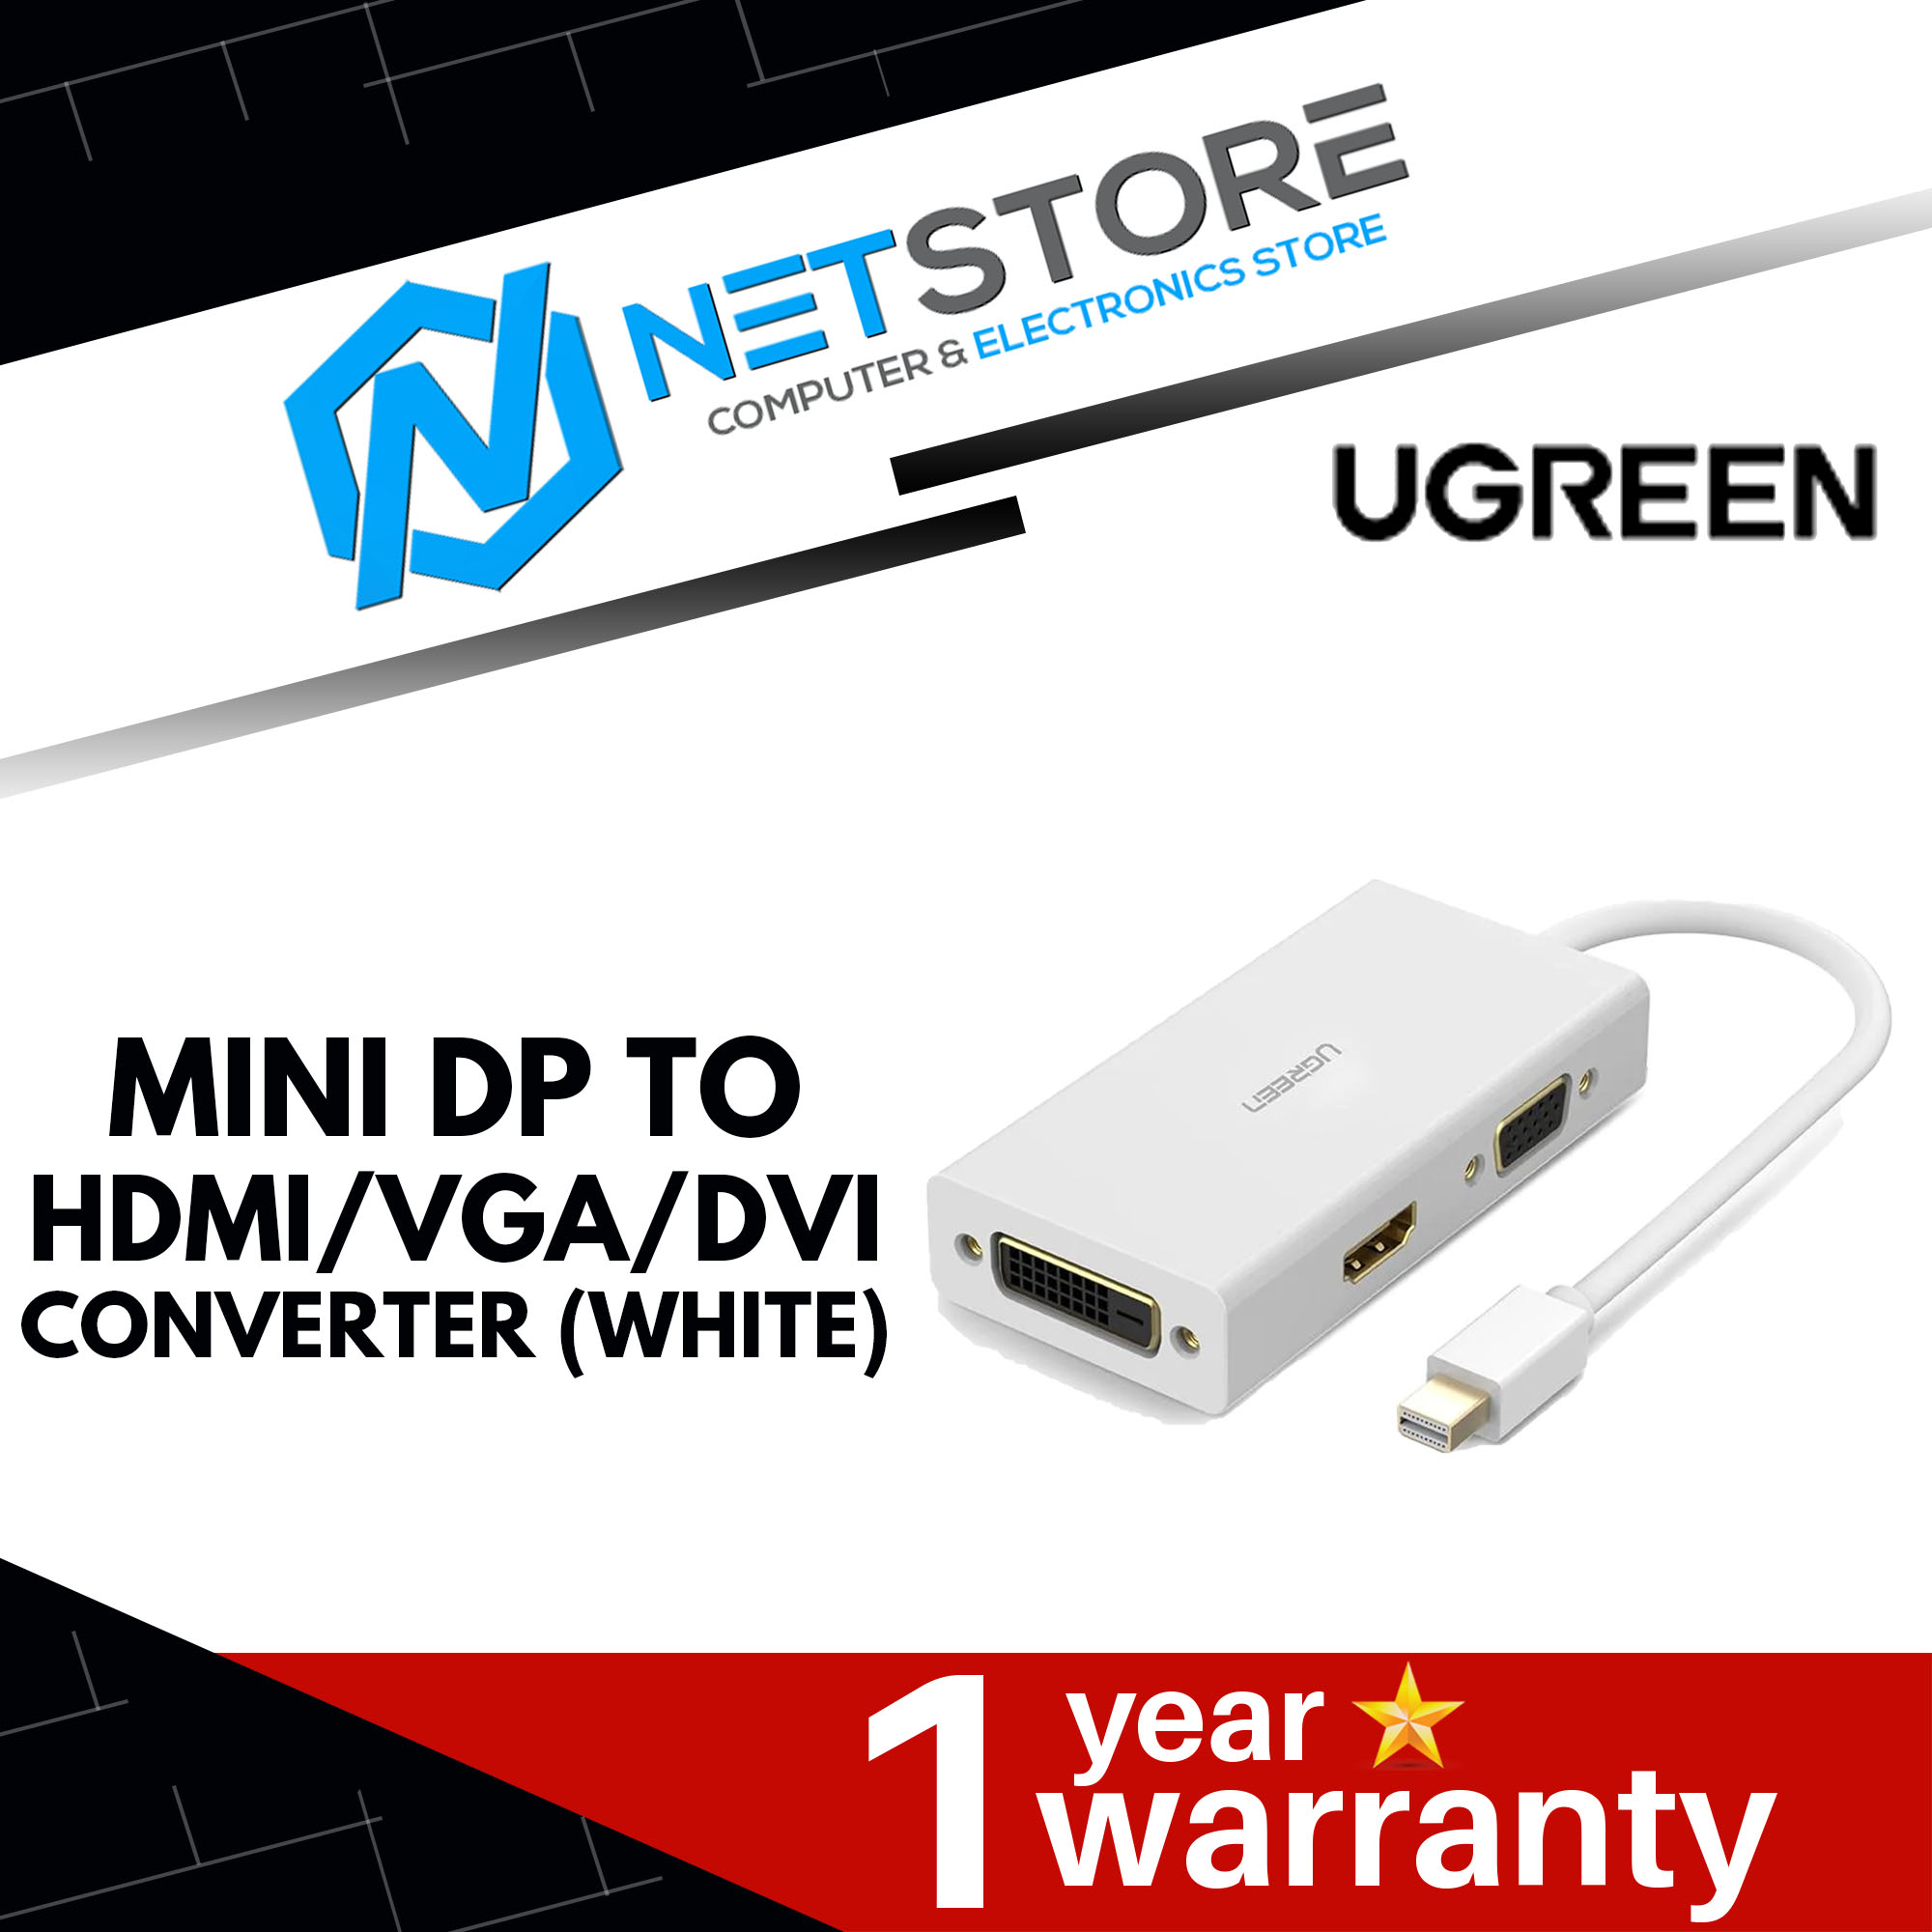 UGREEN MINI DP TO HDMI/VGA/DVI CONVERTER (WHITE) - UG-MD114-20417